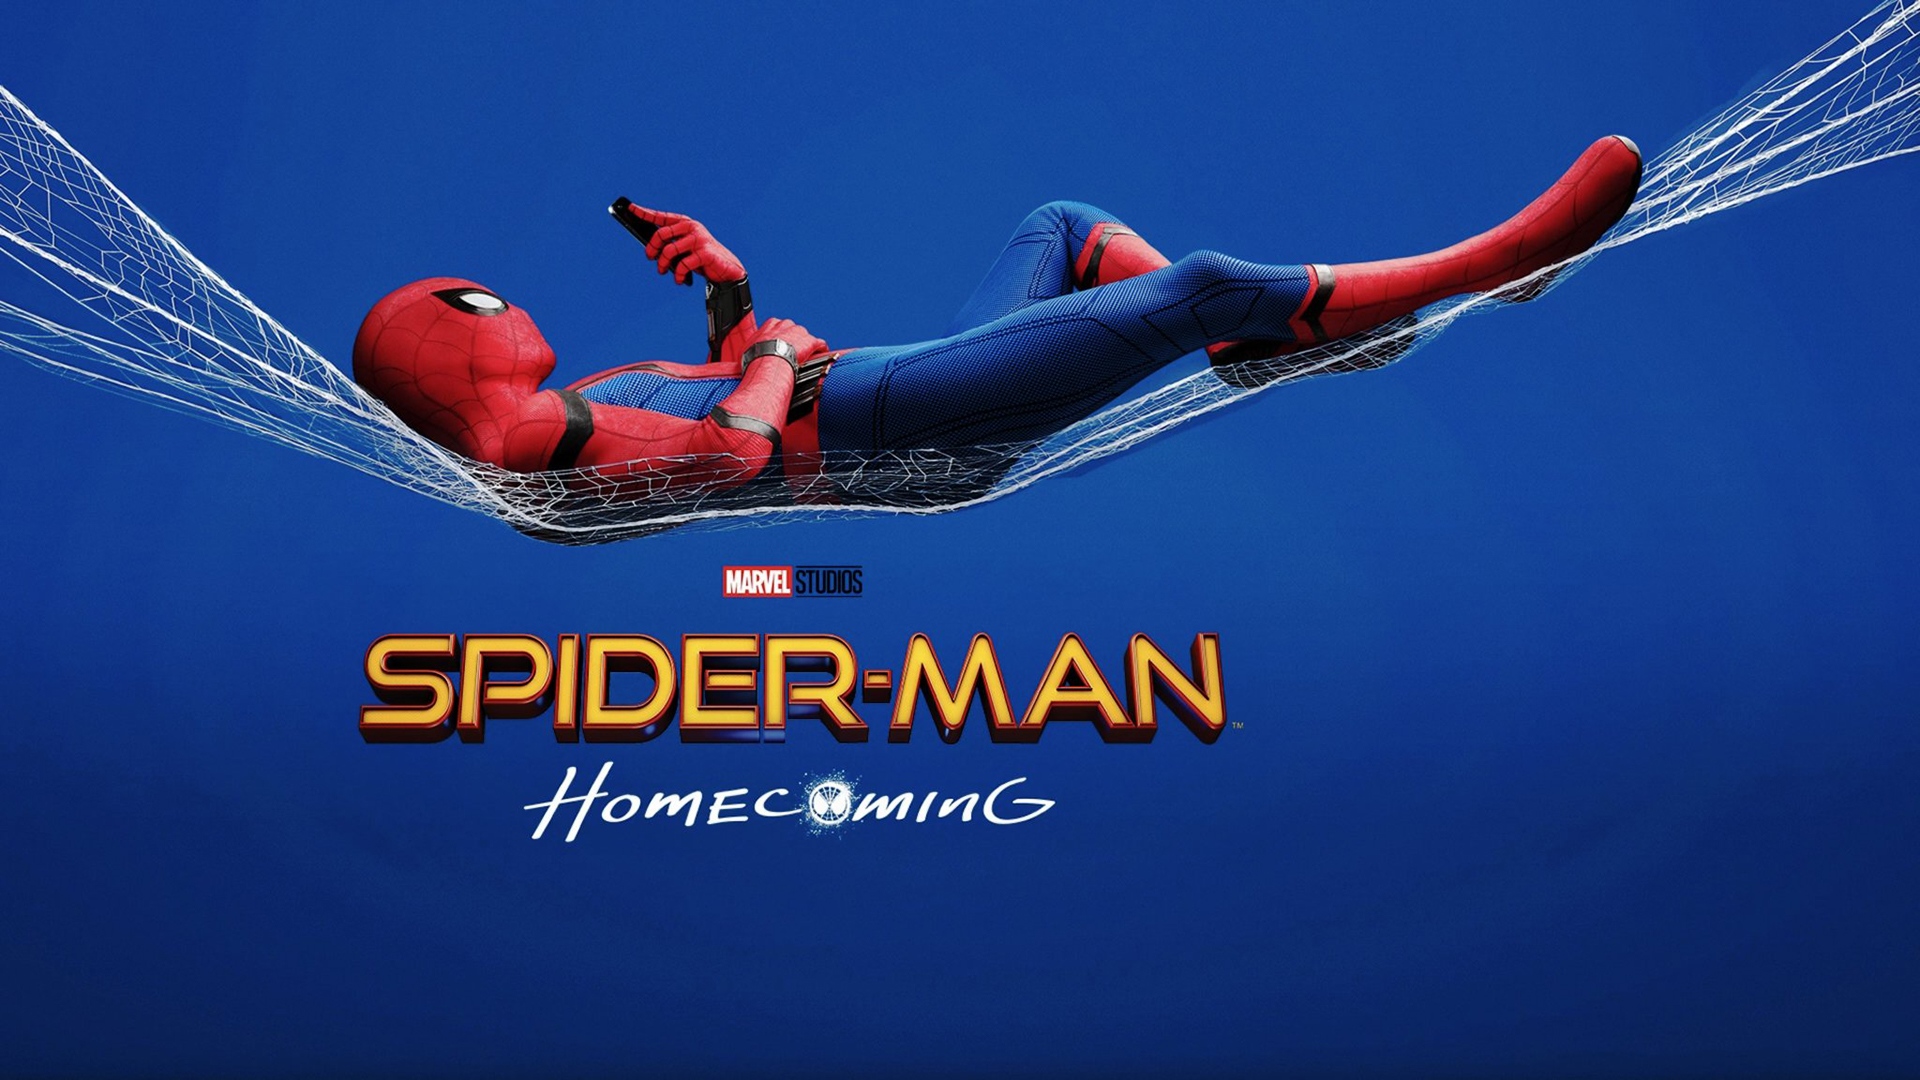 Spider-Man Homecoming (English) full movie tamil 1080p hd